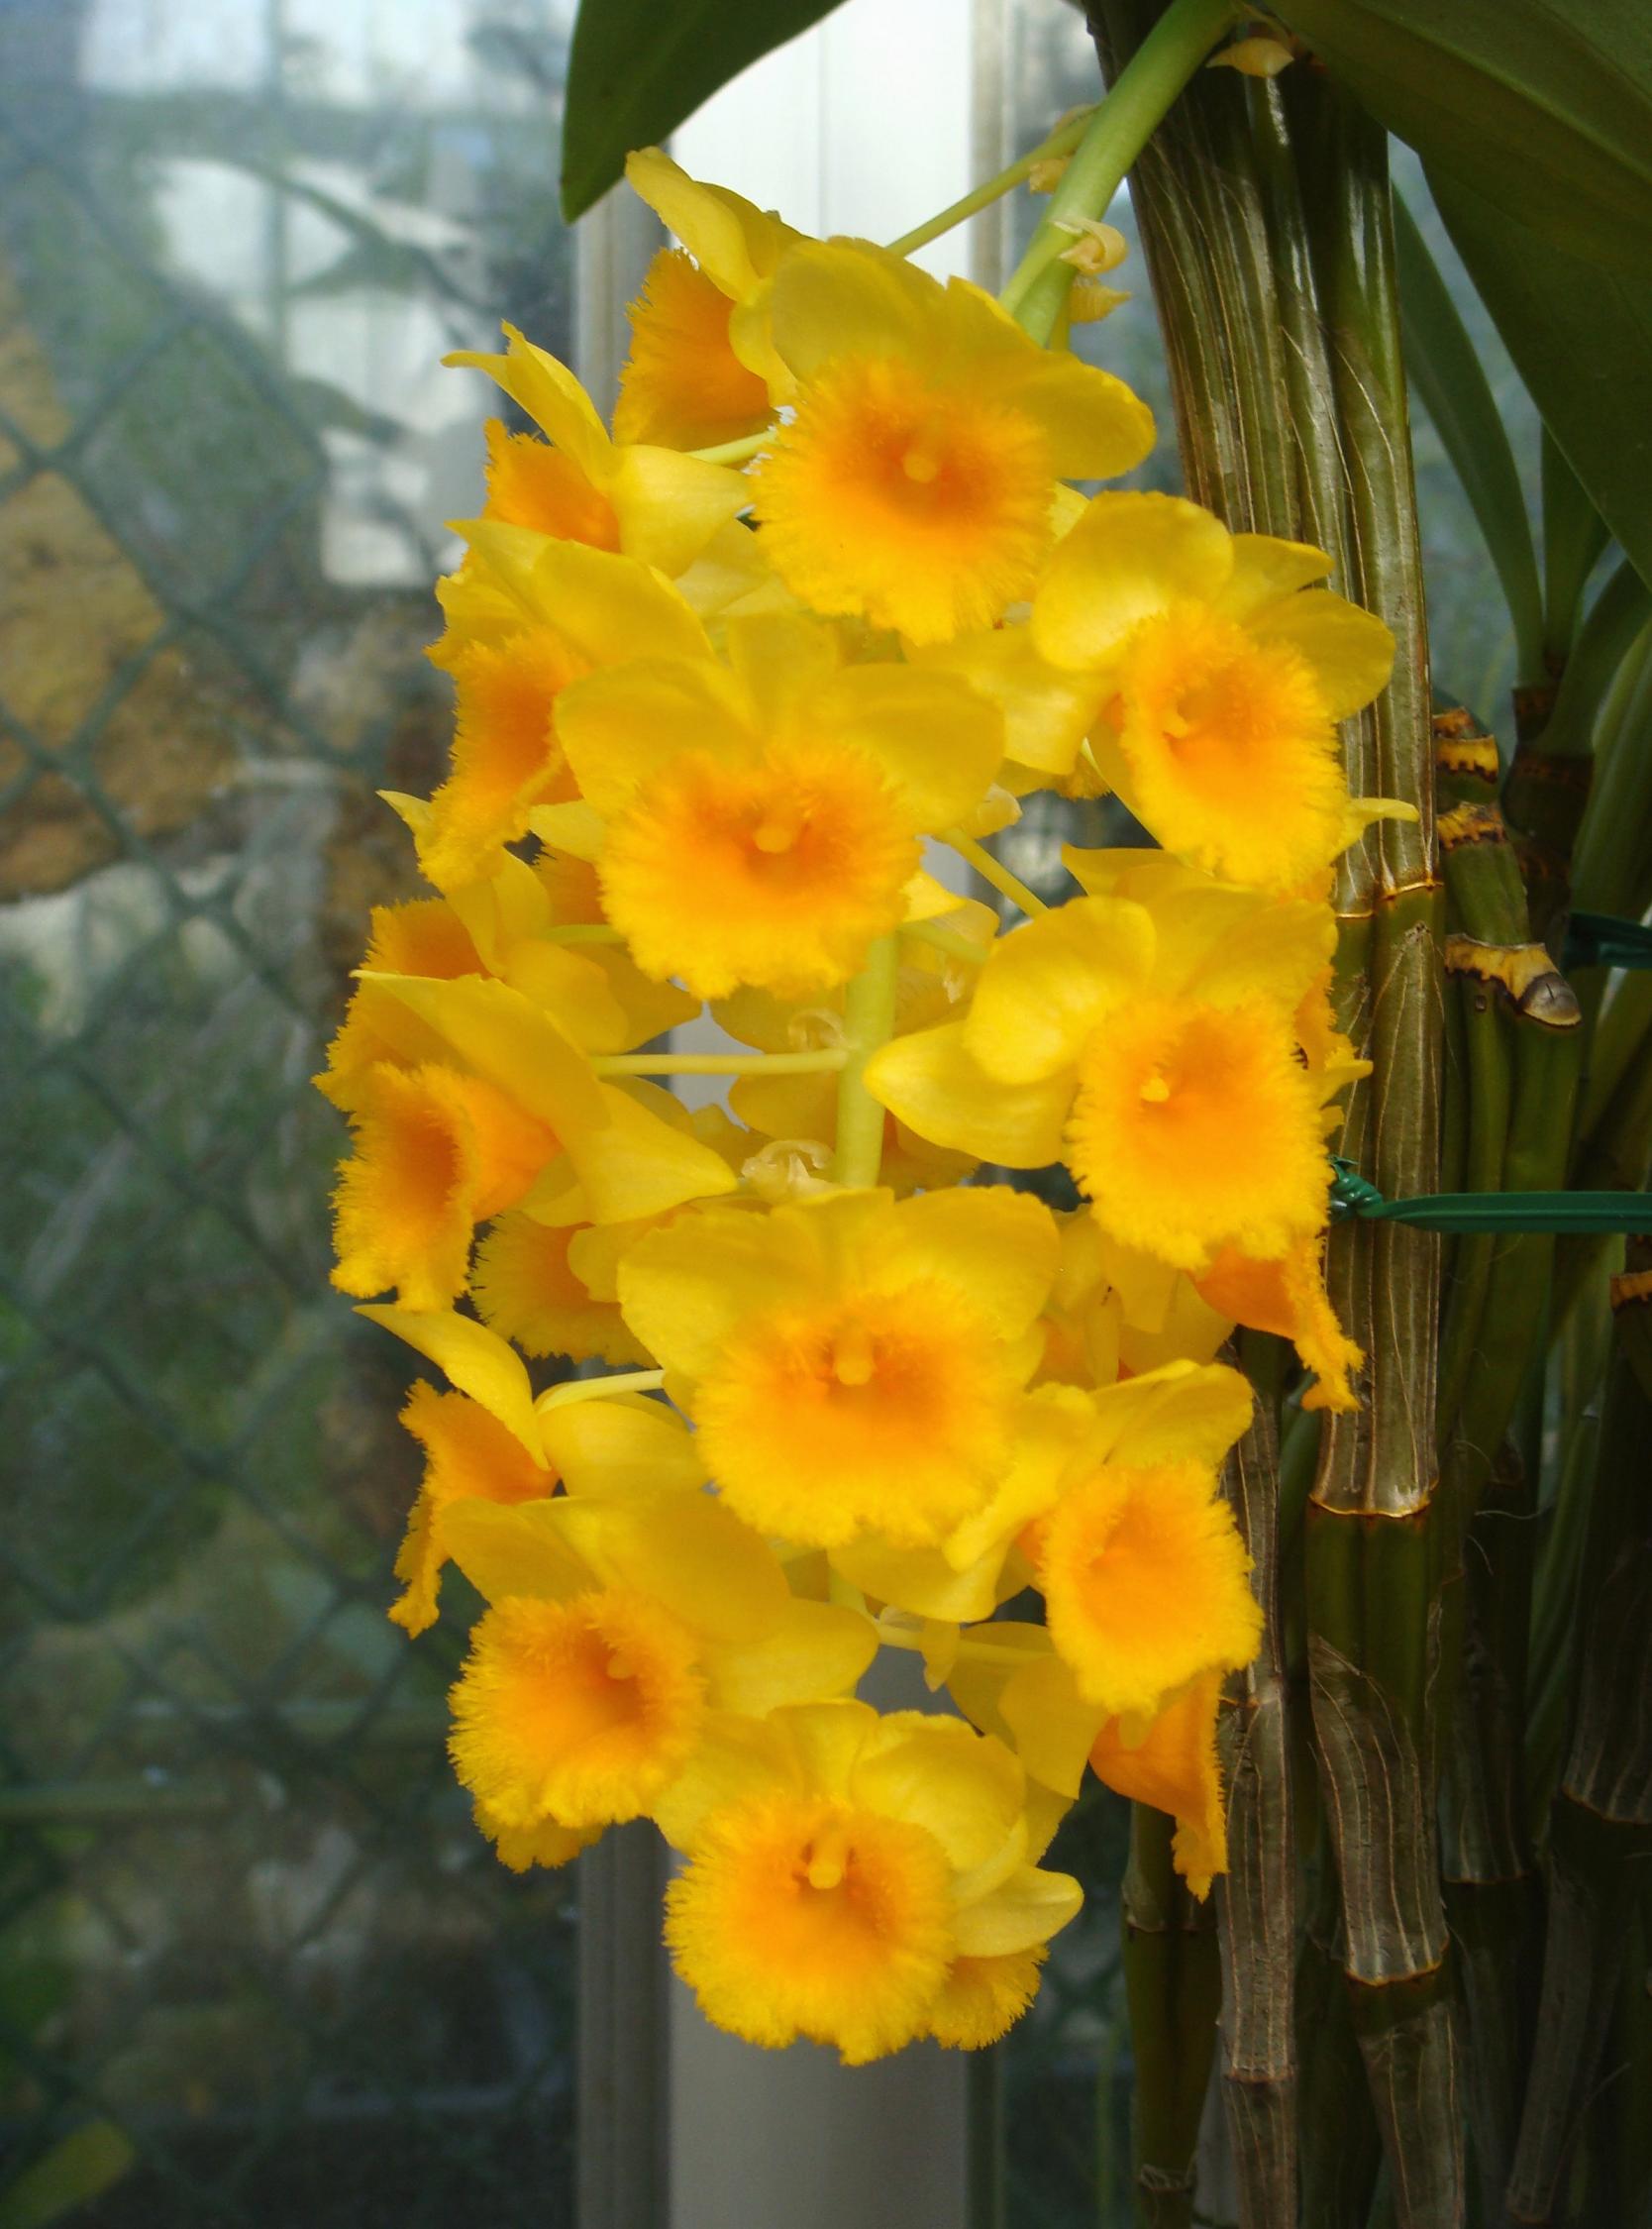 http://orchids.la.coocan.jp/Dendrobium/Dendrobium%20densiflorum/DSC04231.JPG